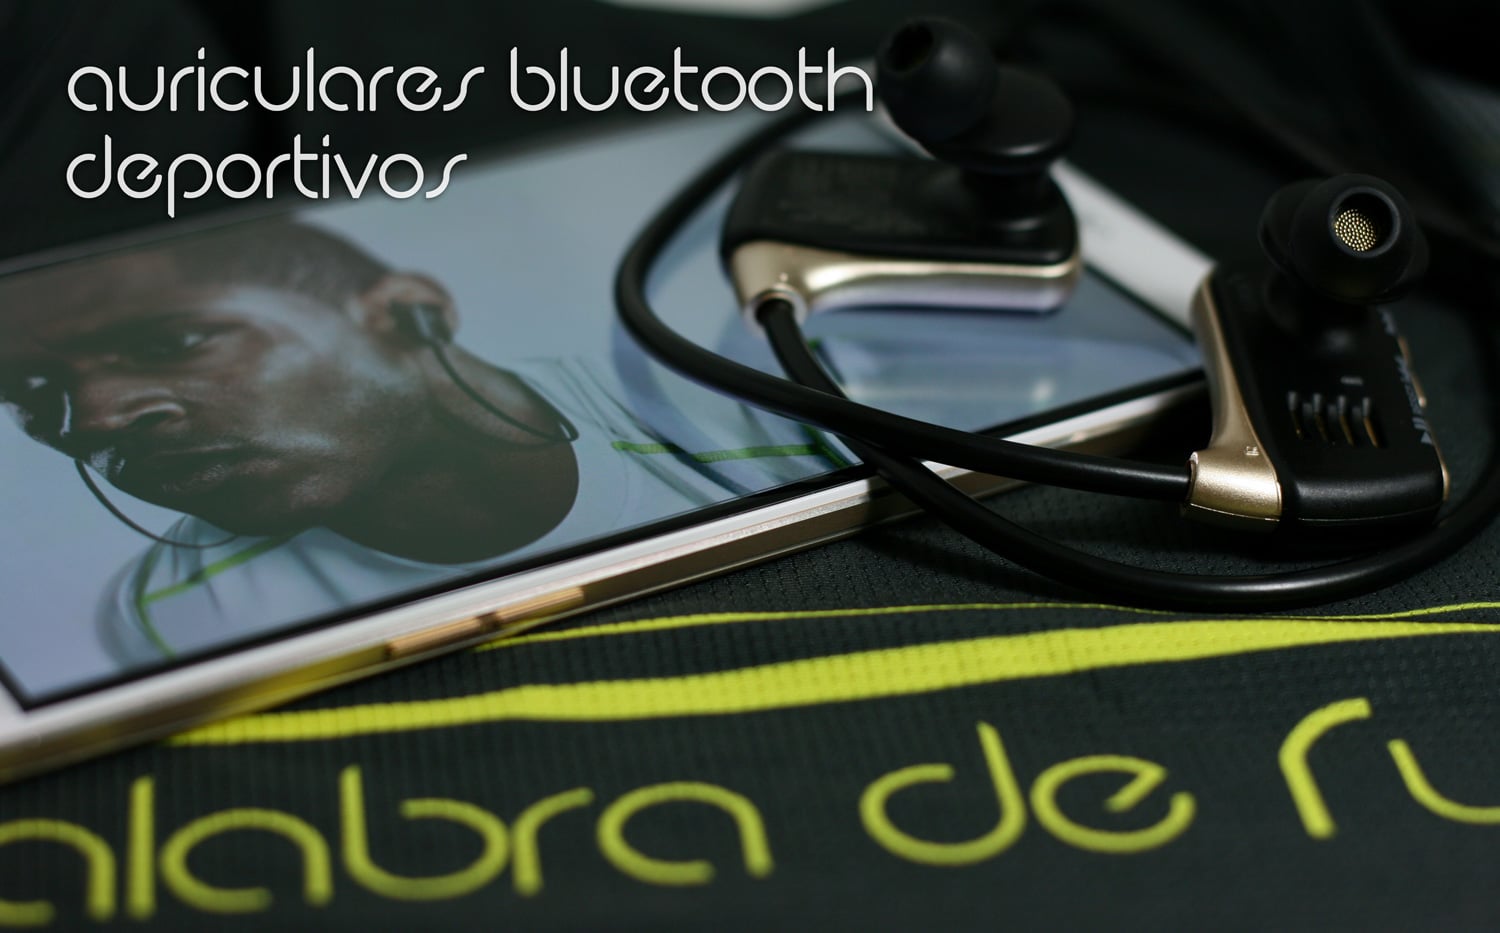 Audifonos Bluetooth 5.0 Inalambricos Auriculares Para Telefonos Celular  Tablet